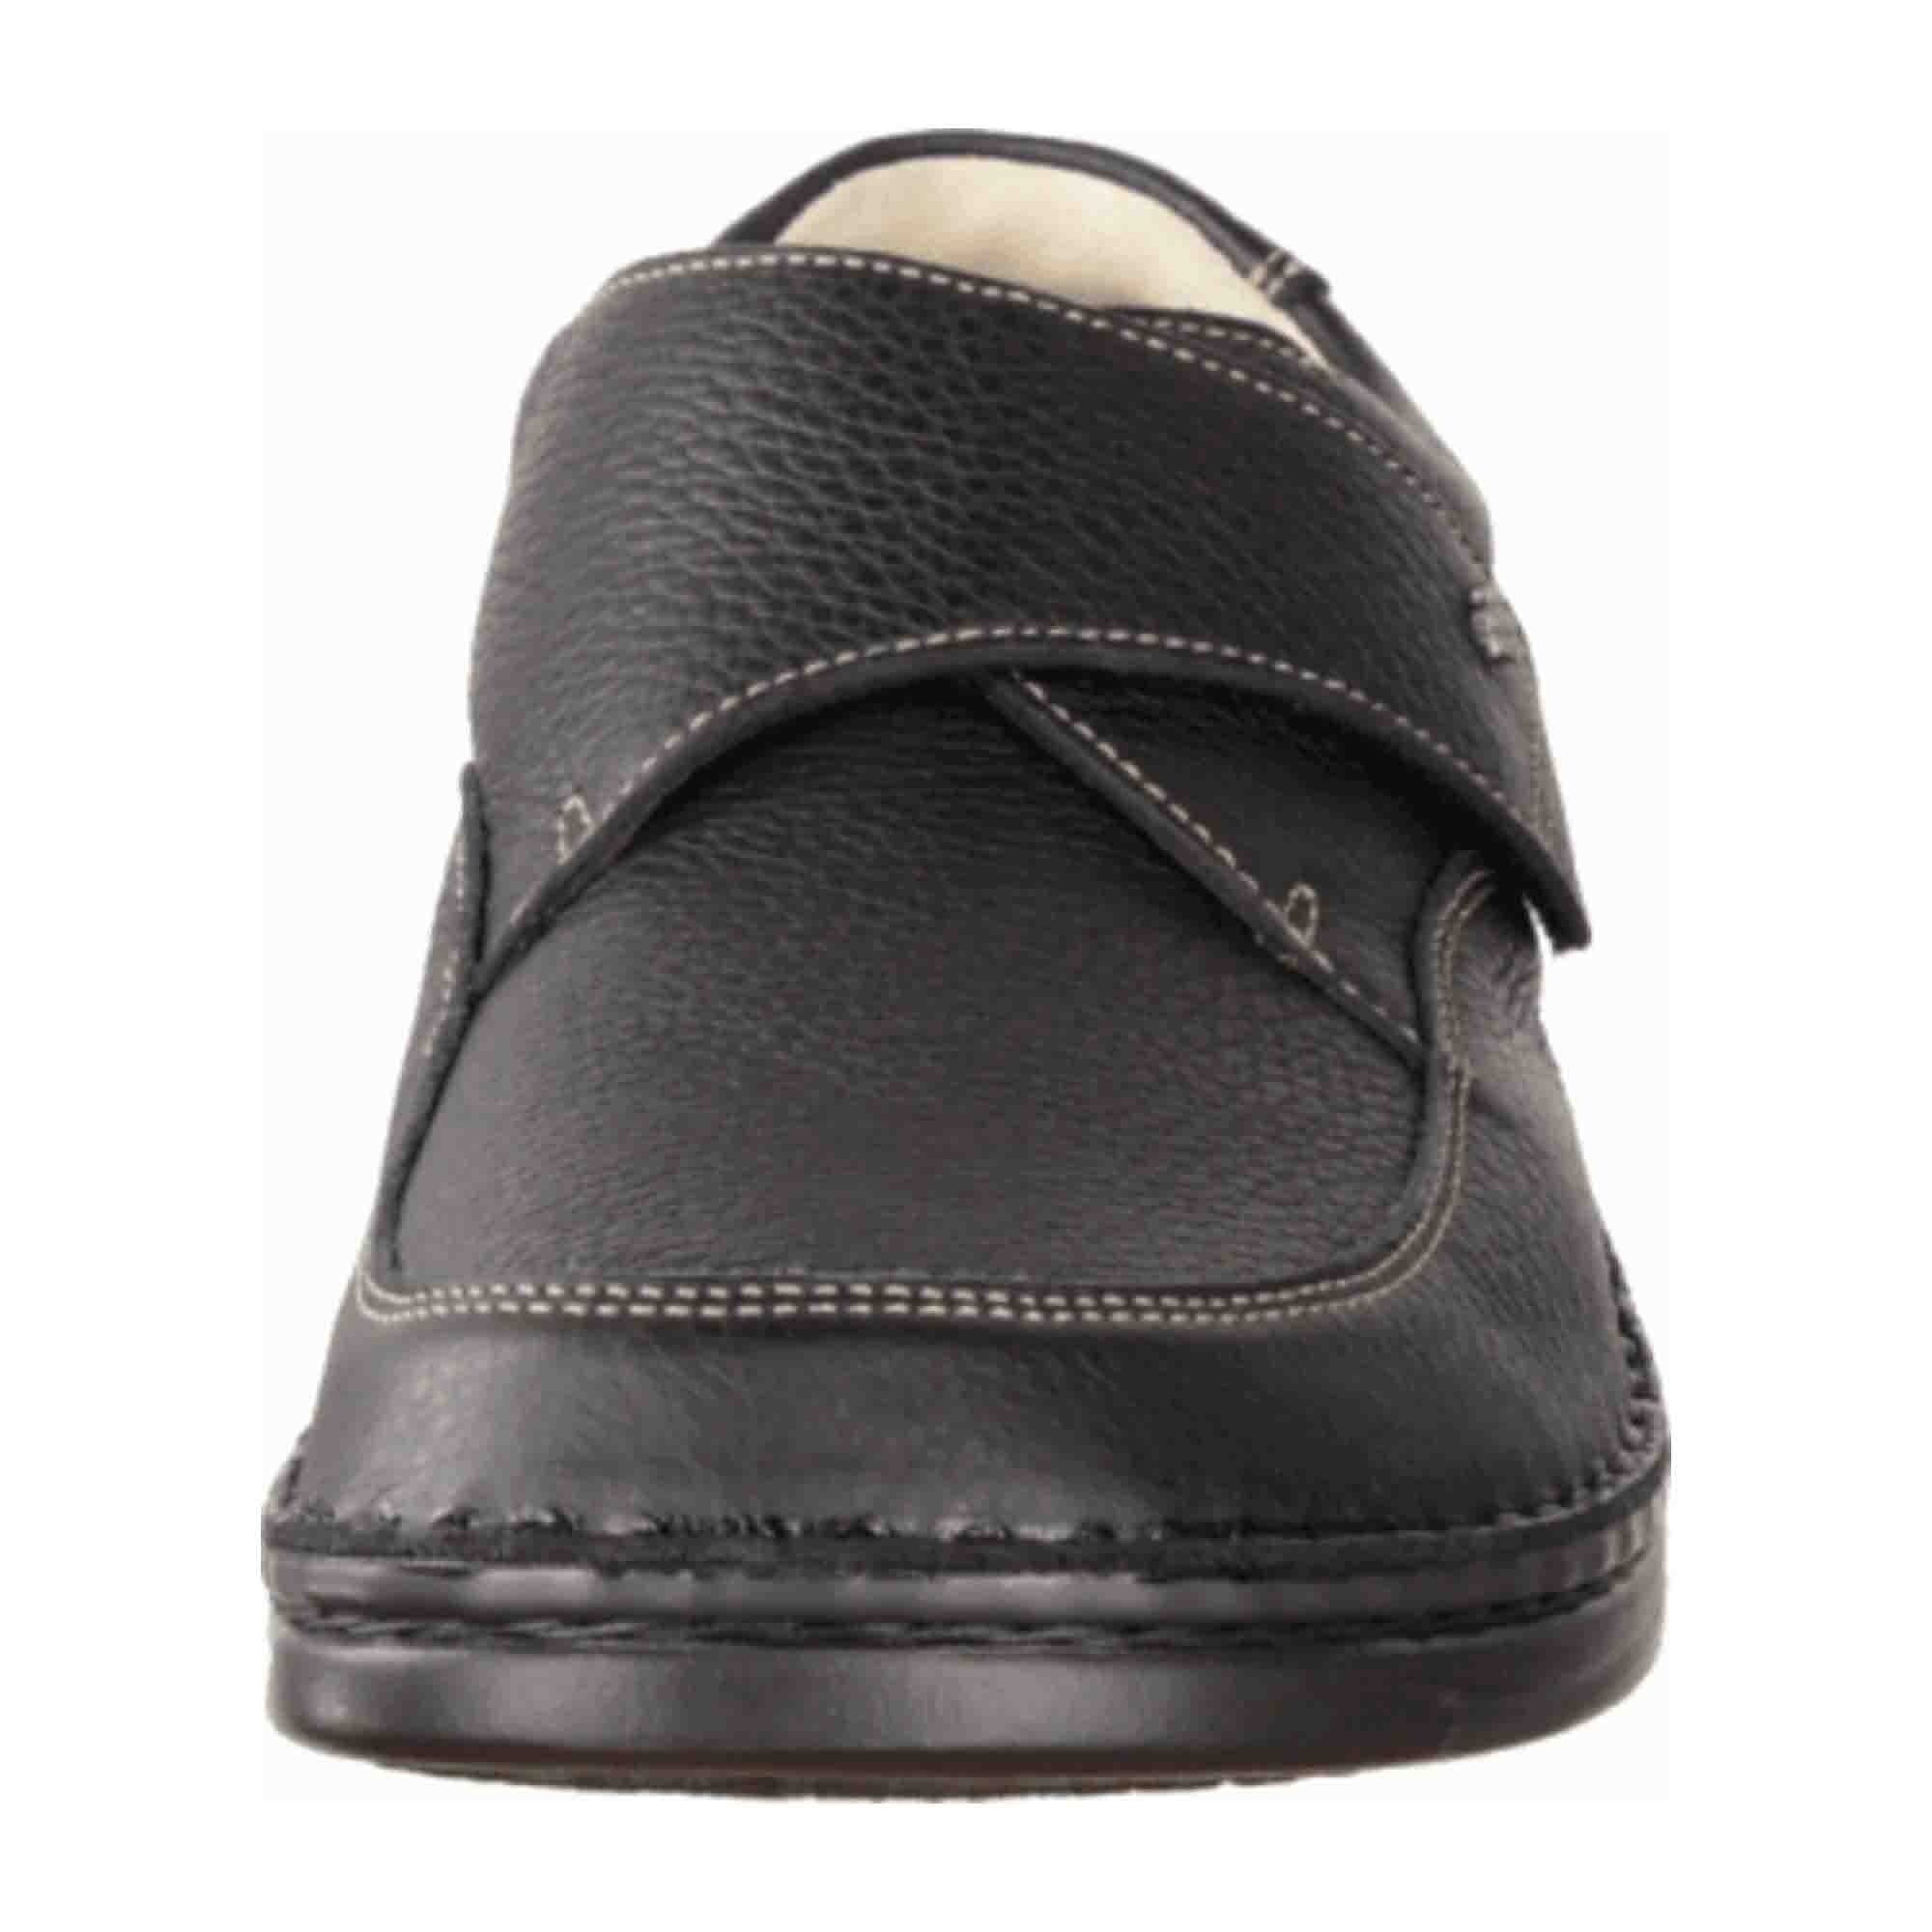 Finn Comfort Braga Men's Black Leather Shoes - Comfortable & Stylish